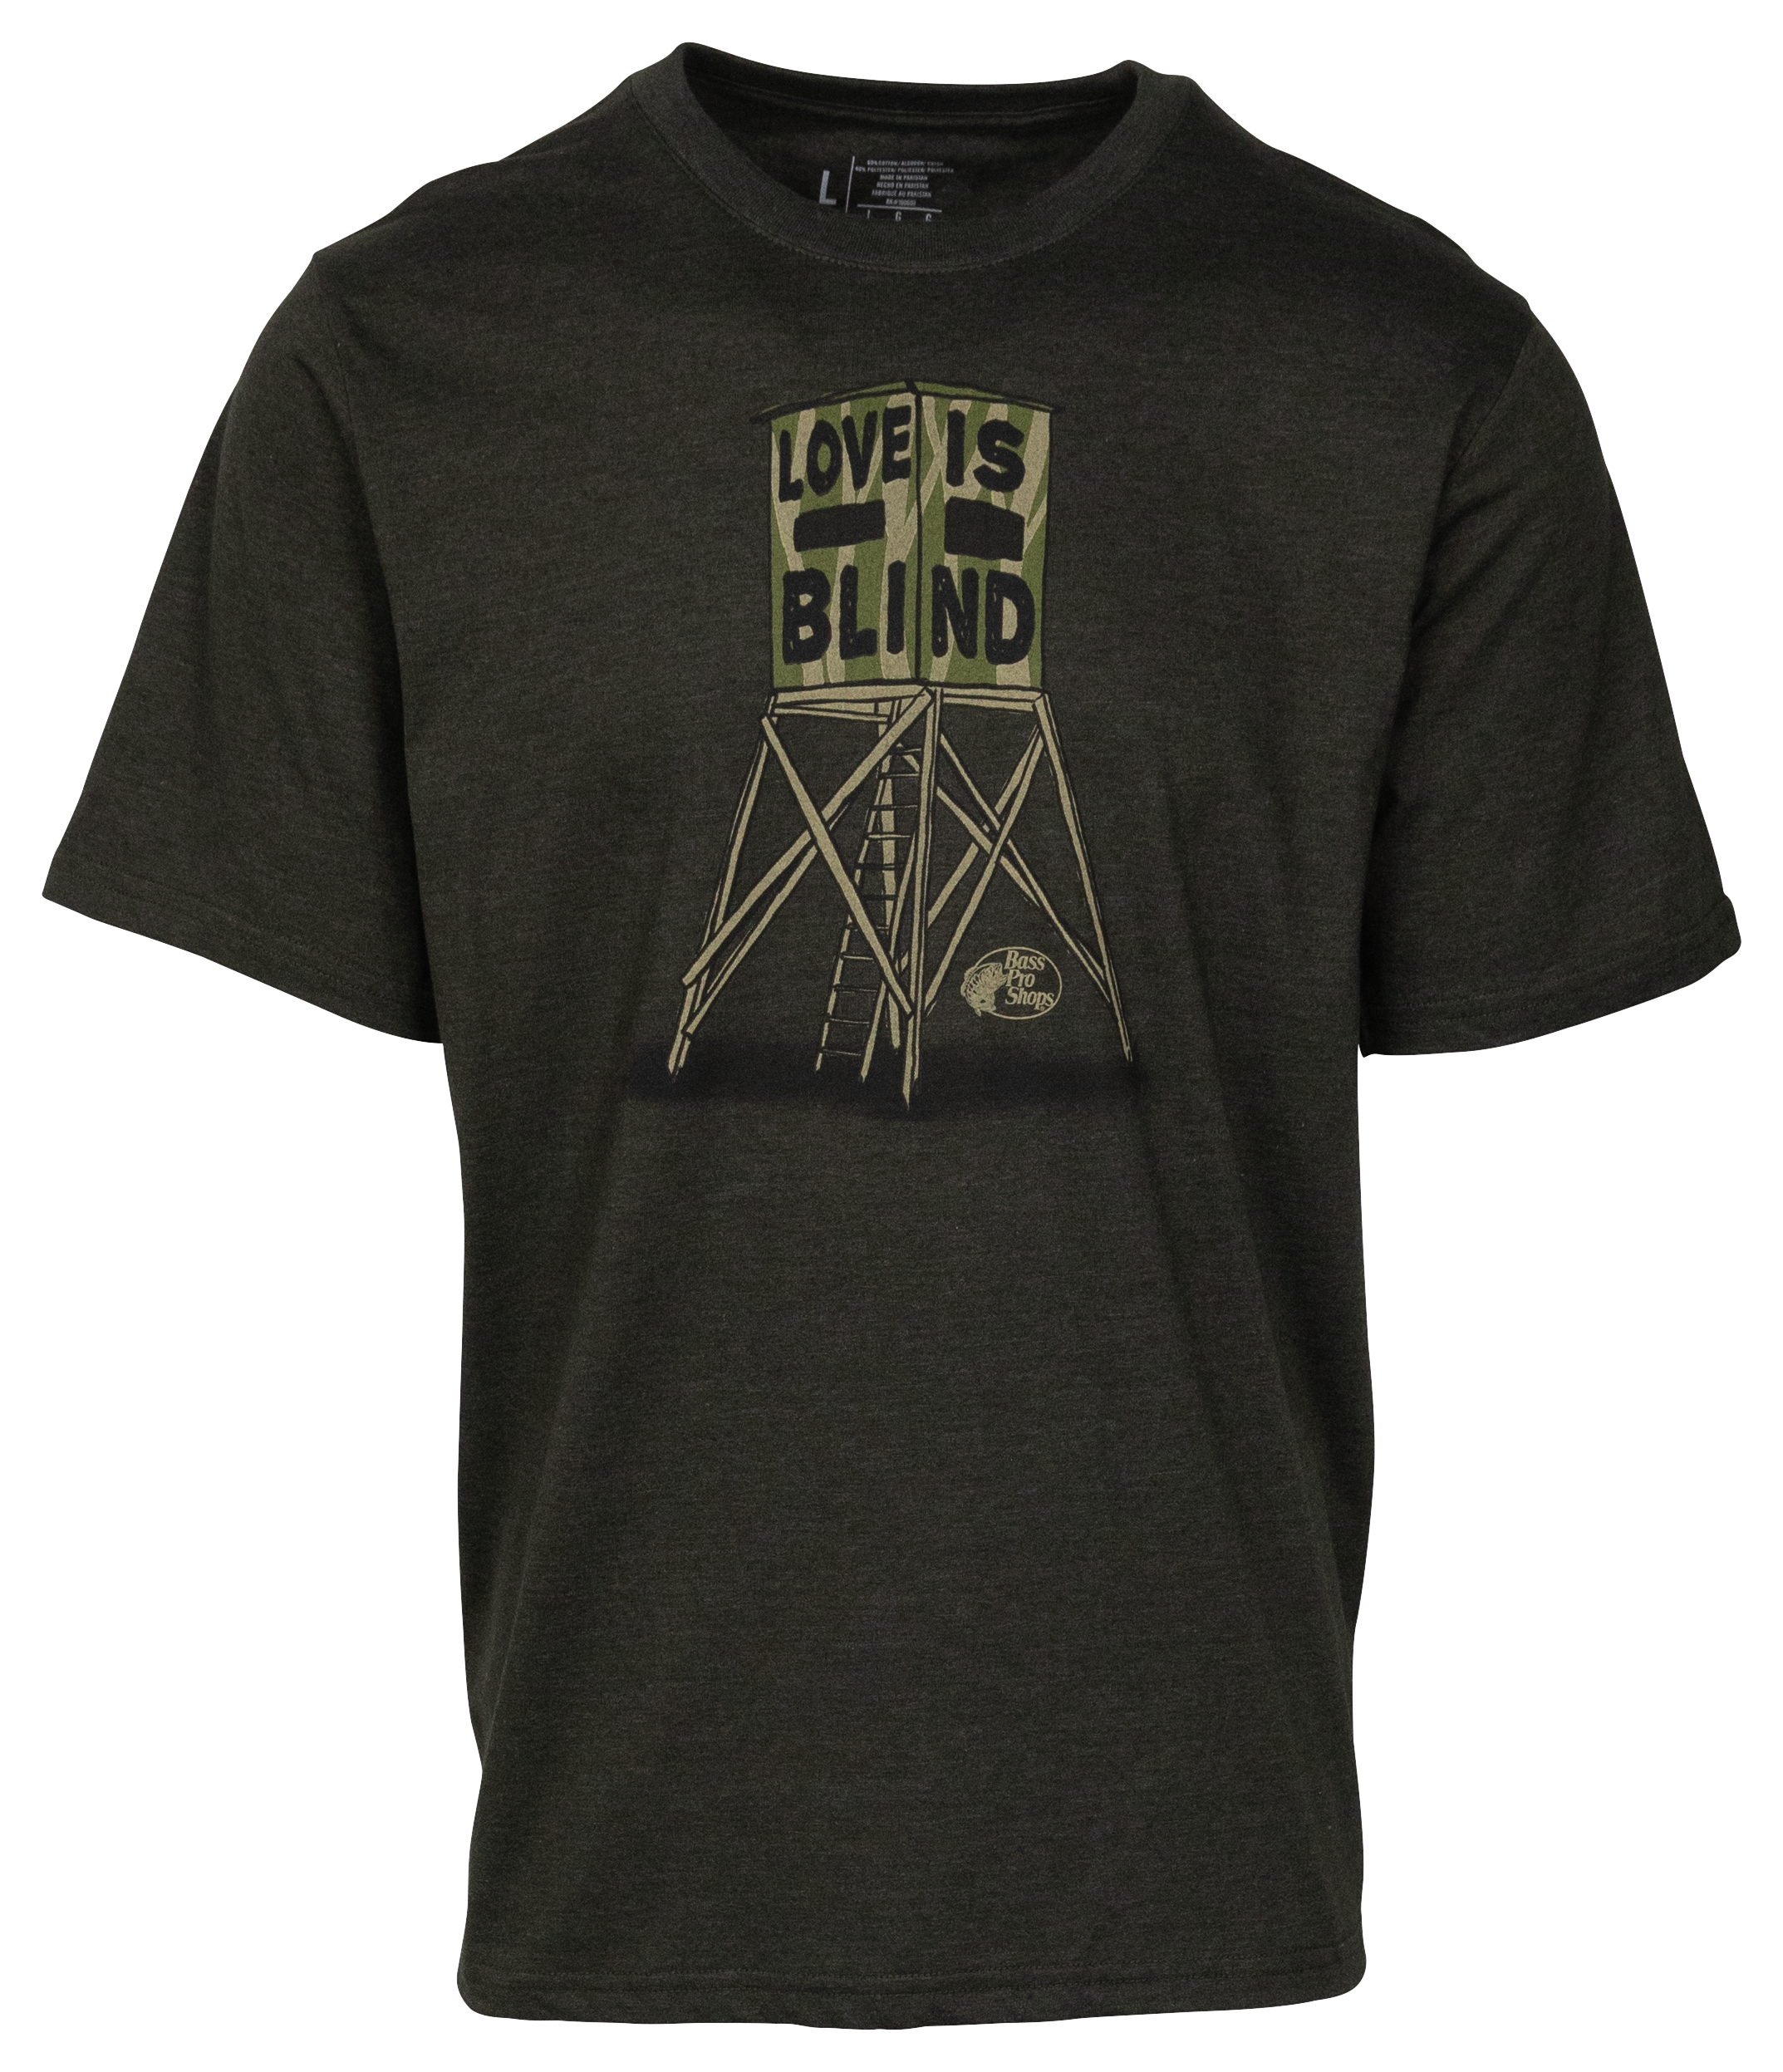 Bass Pro Shops Love Is Blind Short-Sleeve T-Shirt for Men - Olive Heather - S